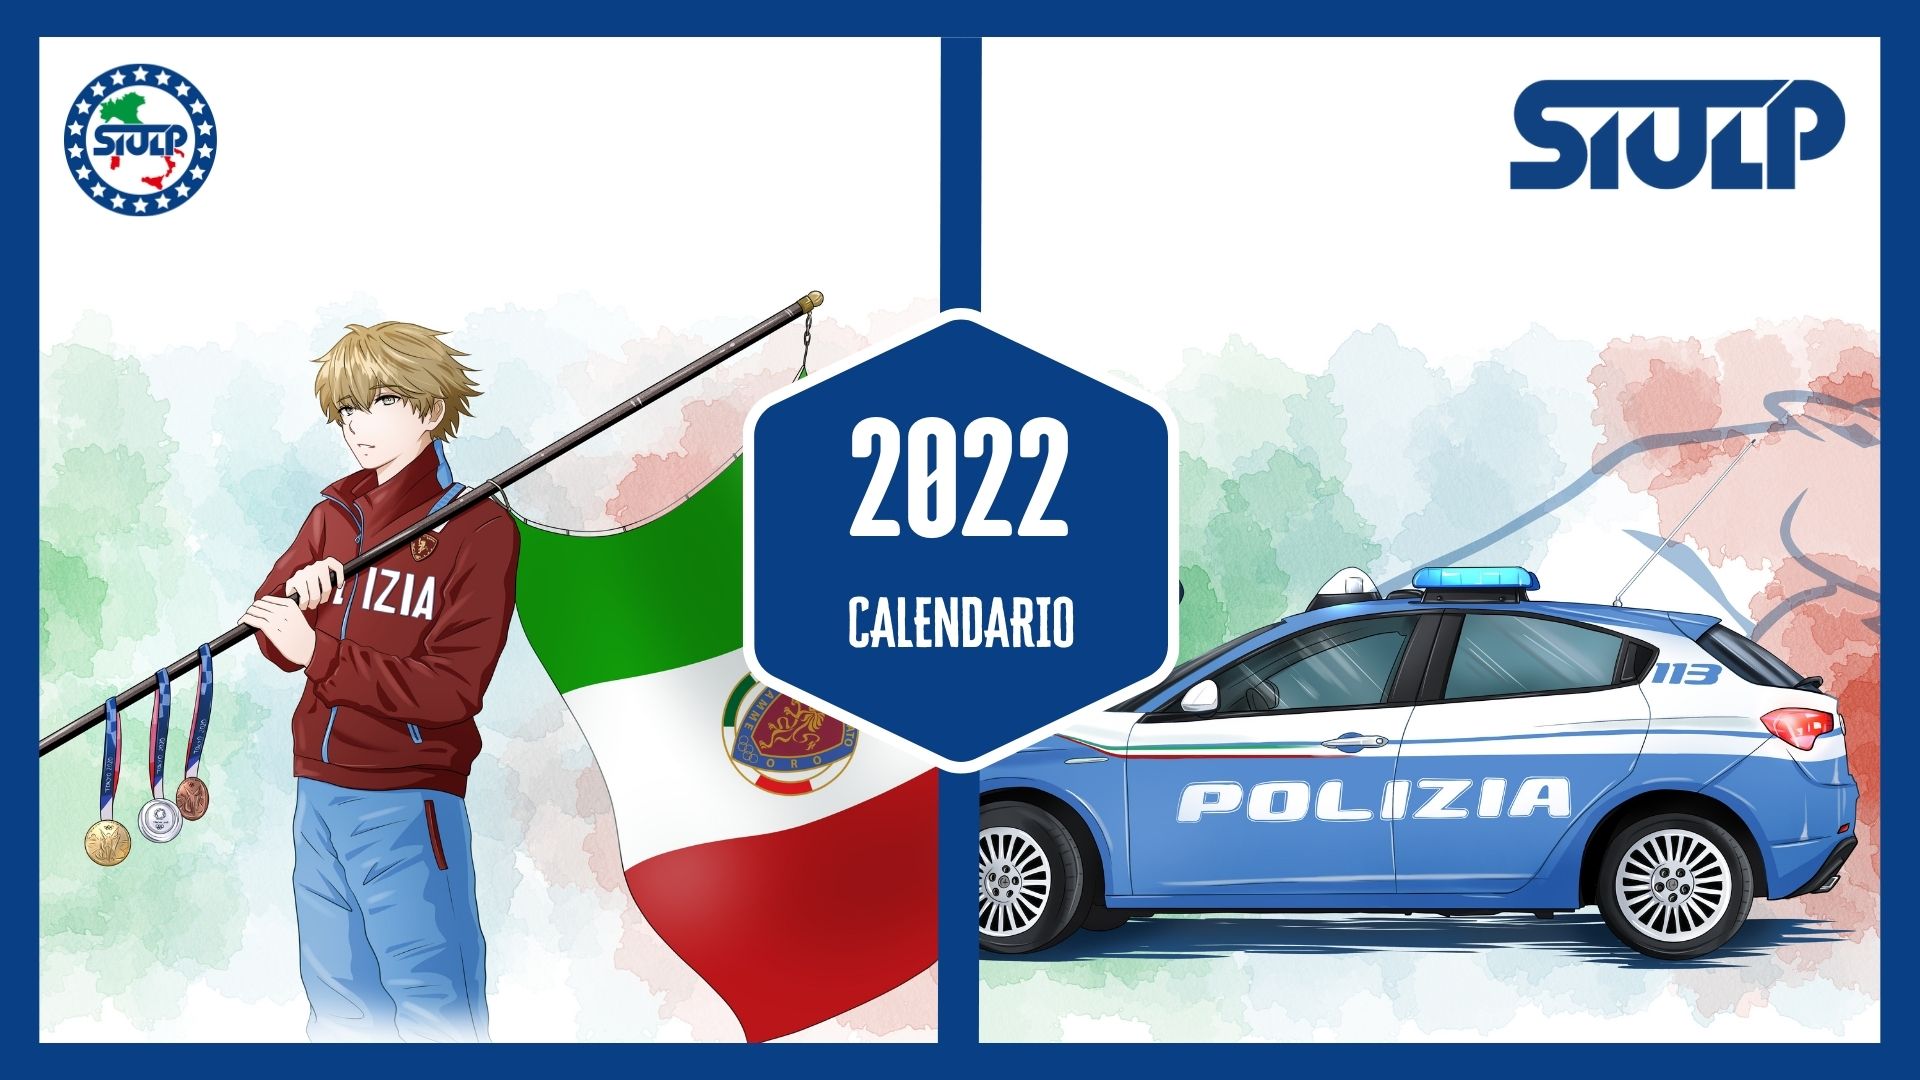 Calendario 2022 SIULP - SIULP